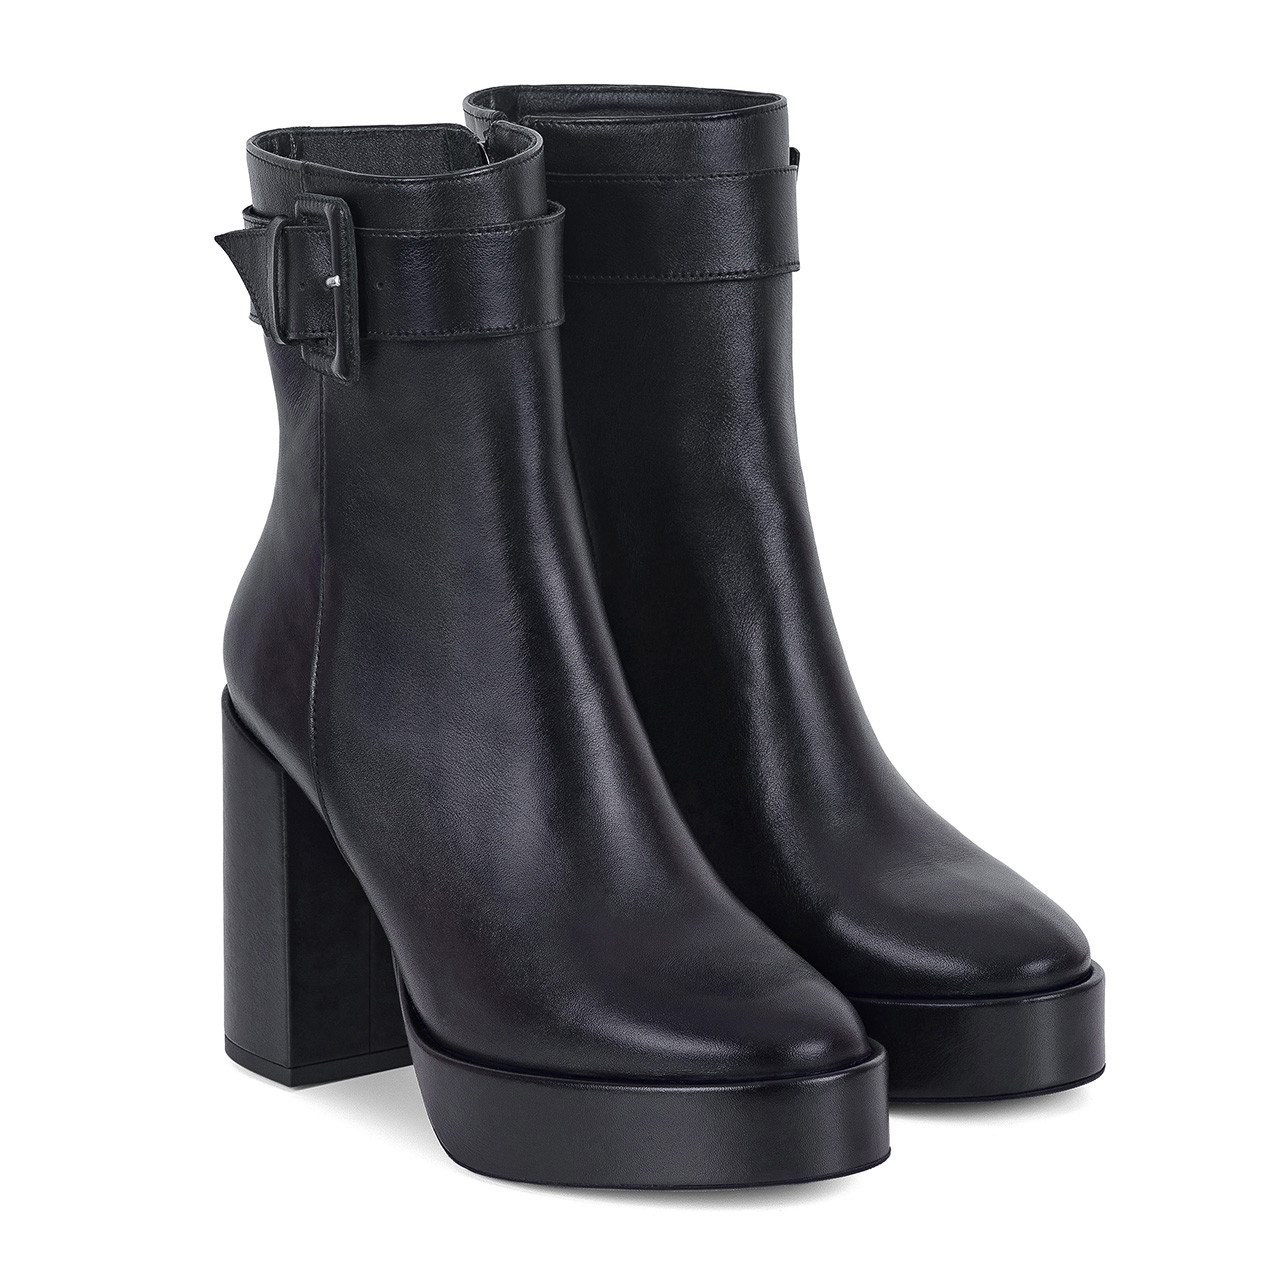 Elegant black boots